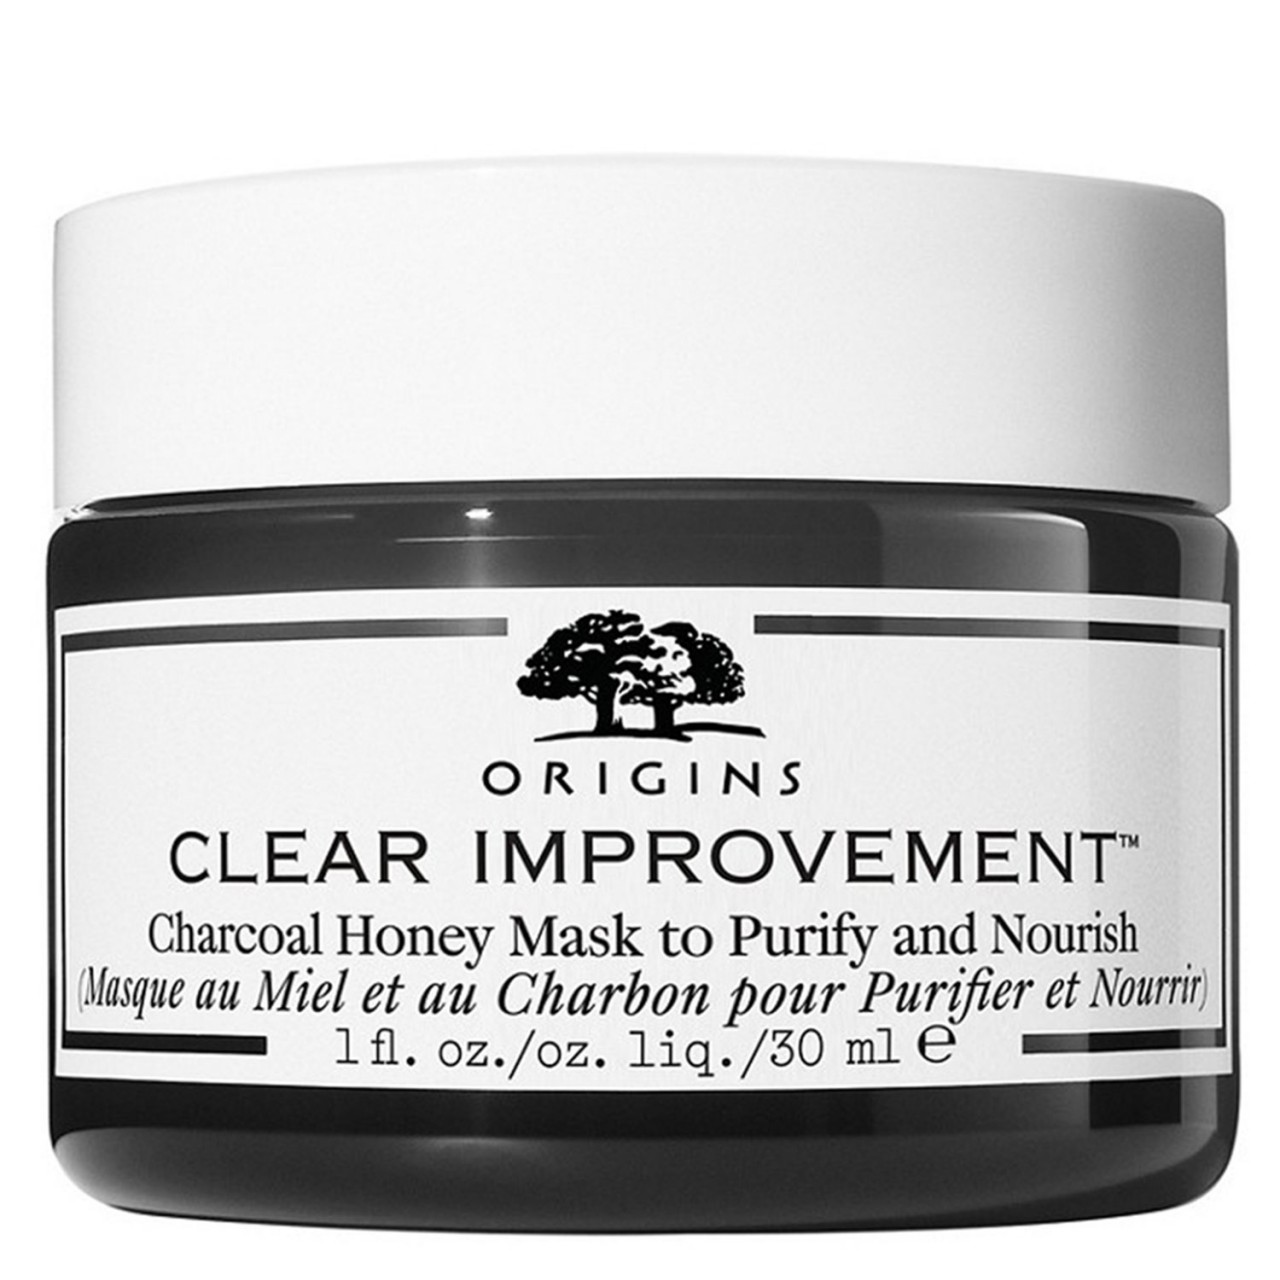 Origins Clear Improvement - Charcoal Honey Mask von Origins